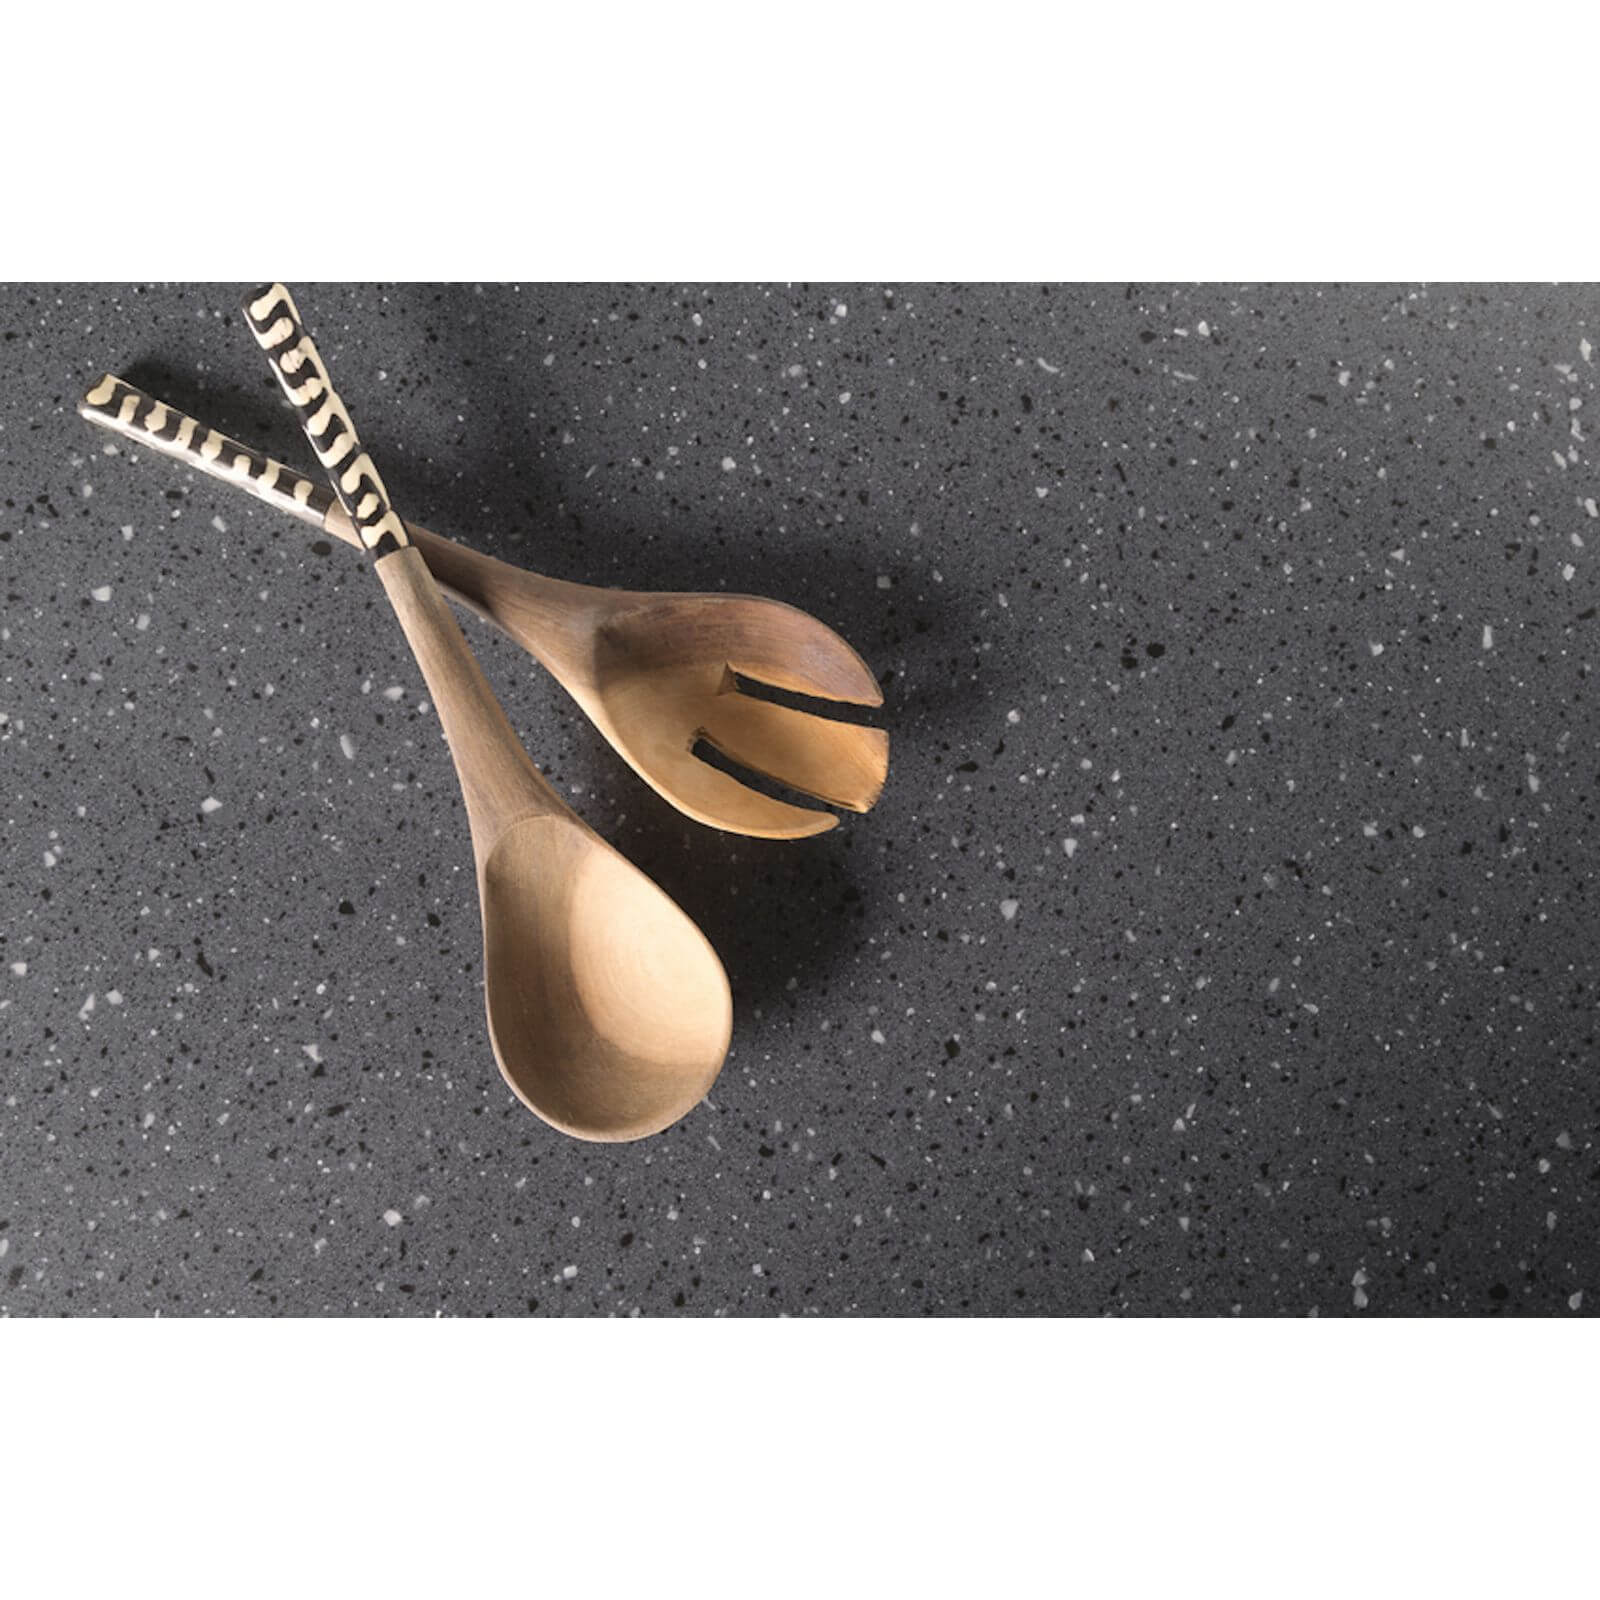 Maia Greystone Kitchen Sink Worktop - Acrylic 1.5 Designer Left Hand Bowl - 1800 x 650 x 28mm